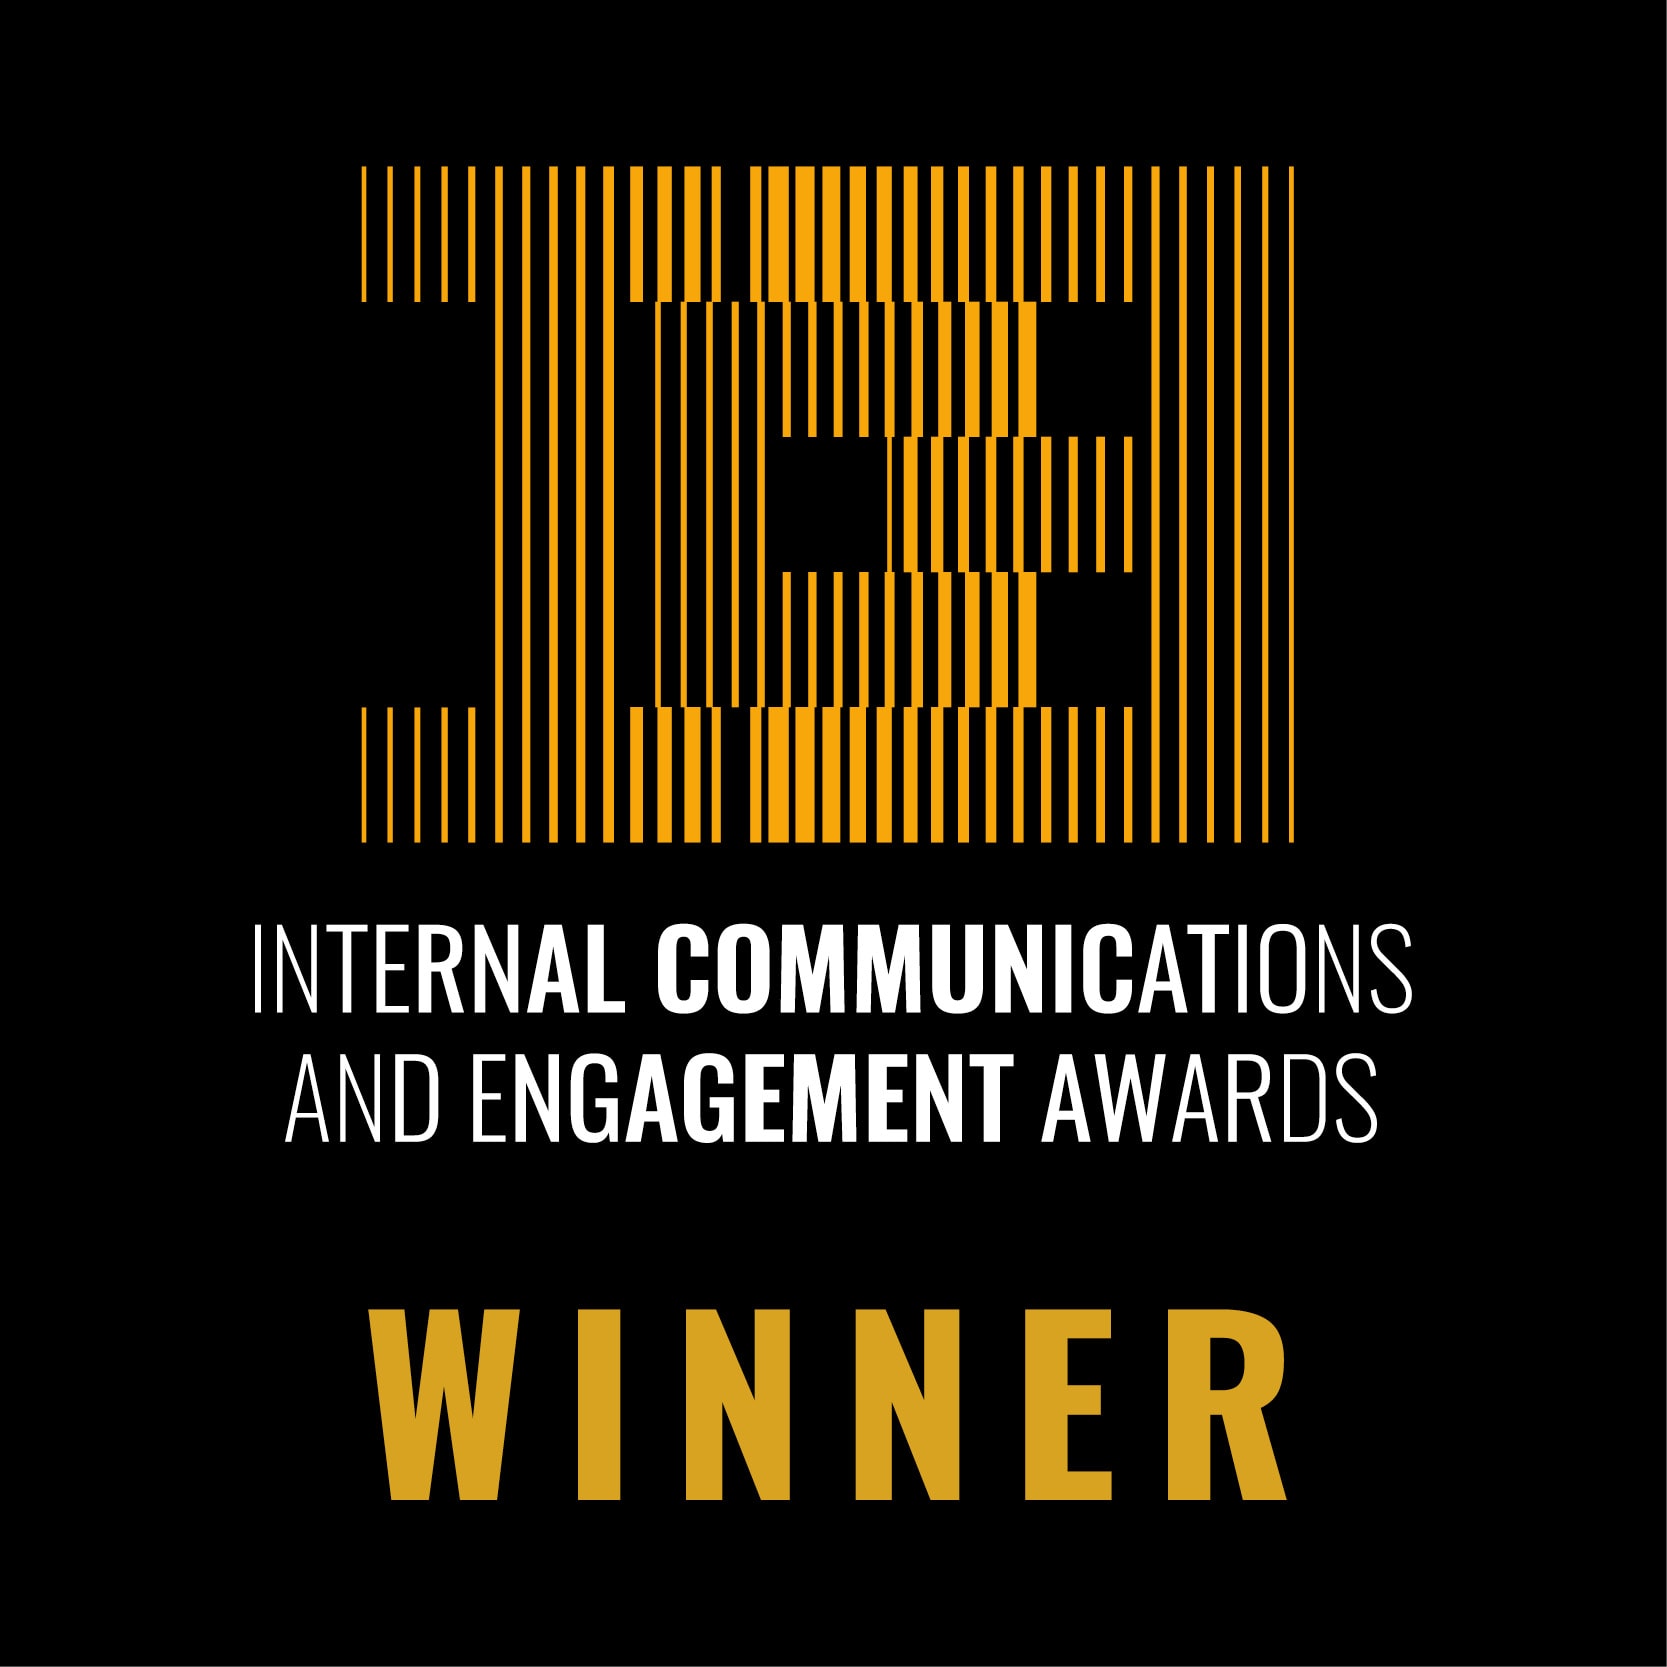 Internal Communications and Engagement Awards winner logo